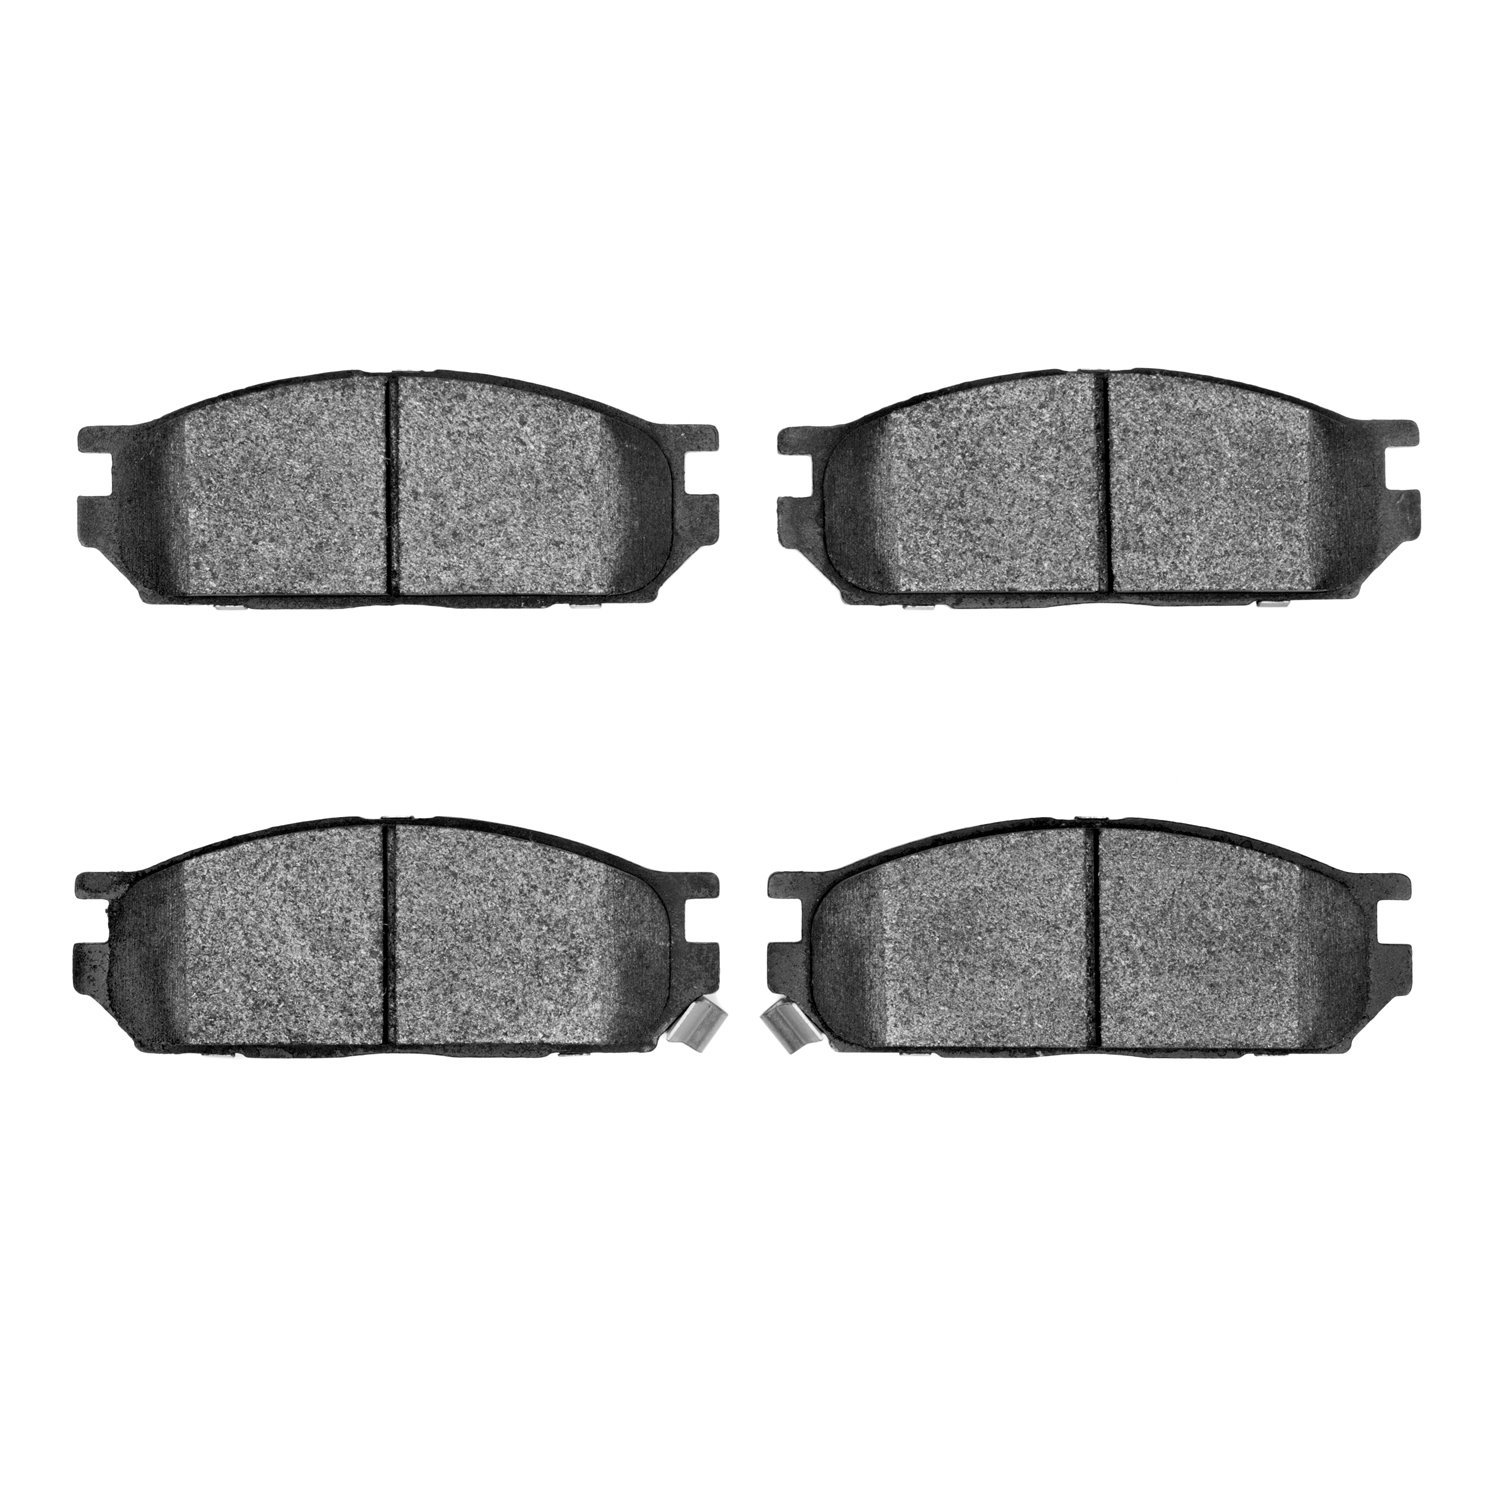 Semi-Metallic Brake Pads, 1991-1992 Fits Multiple Makes/Models, Position: Front